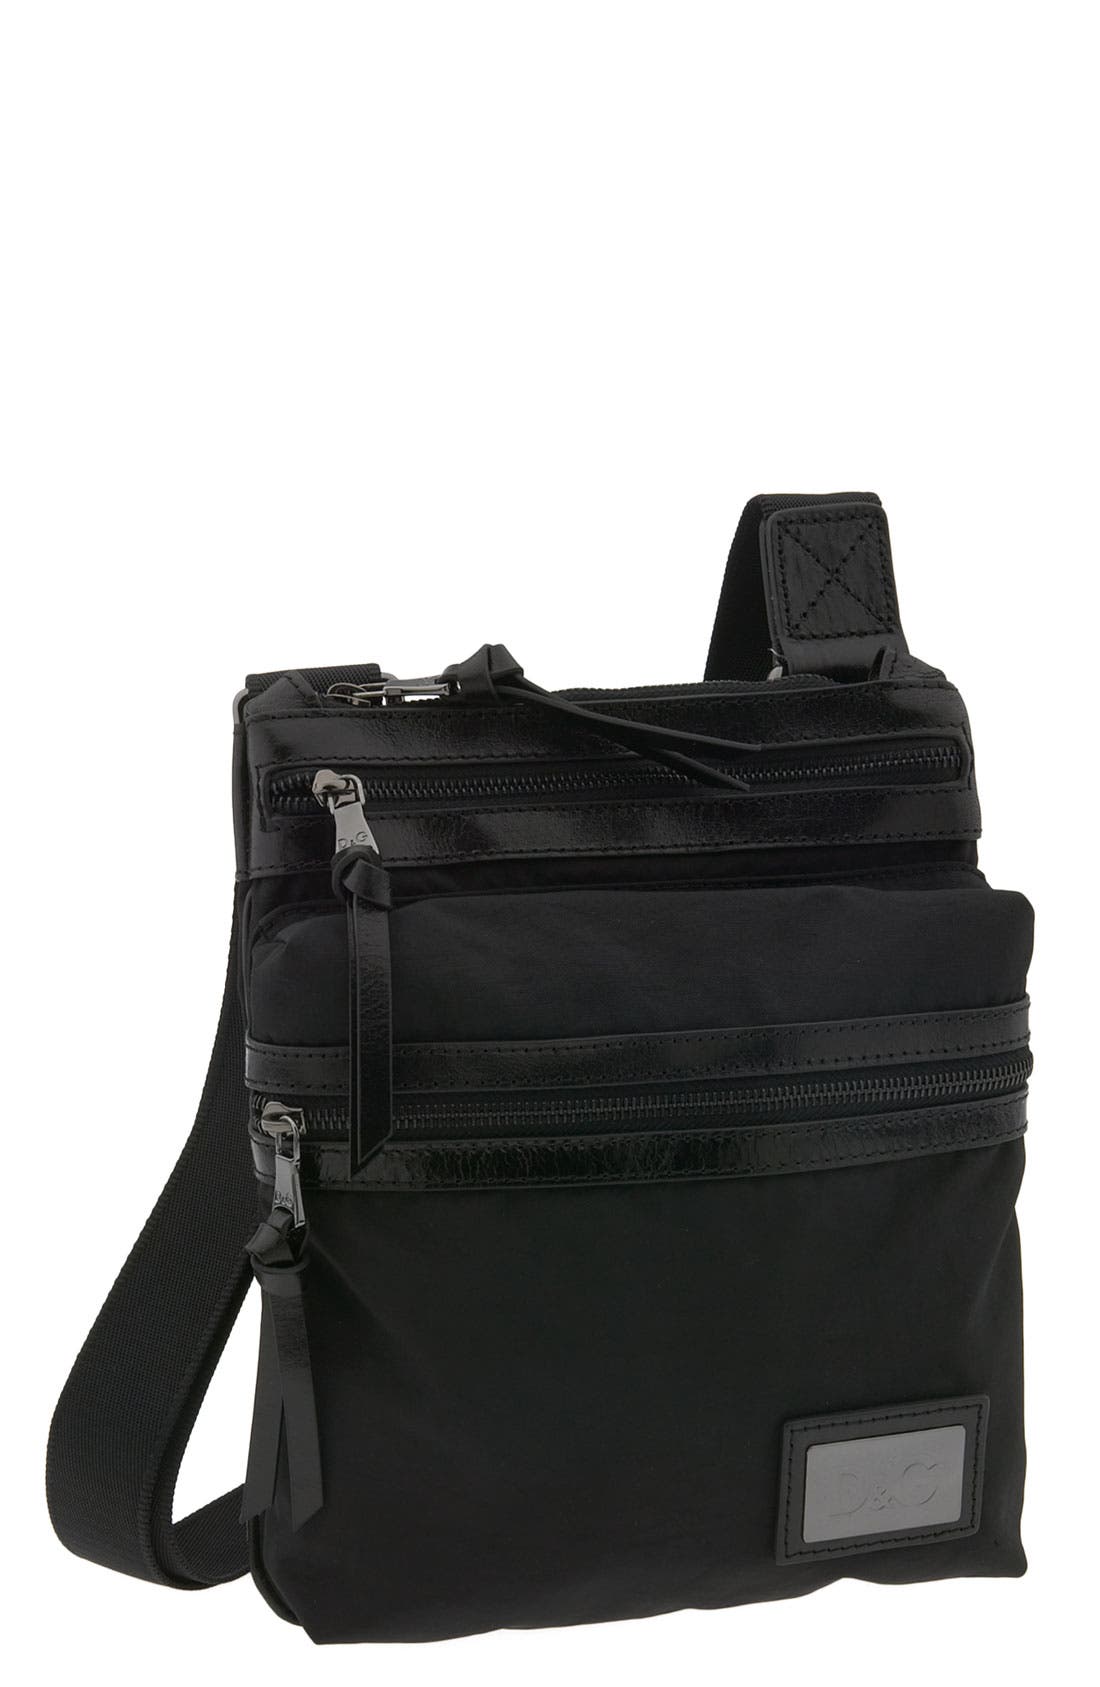 D\u0026G Nylon Messenger Bag with Leather 